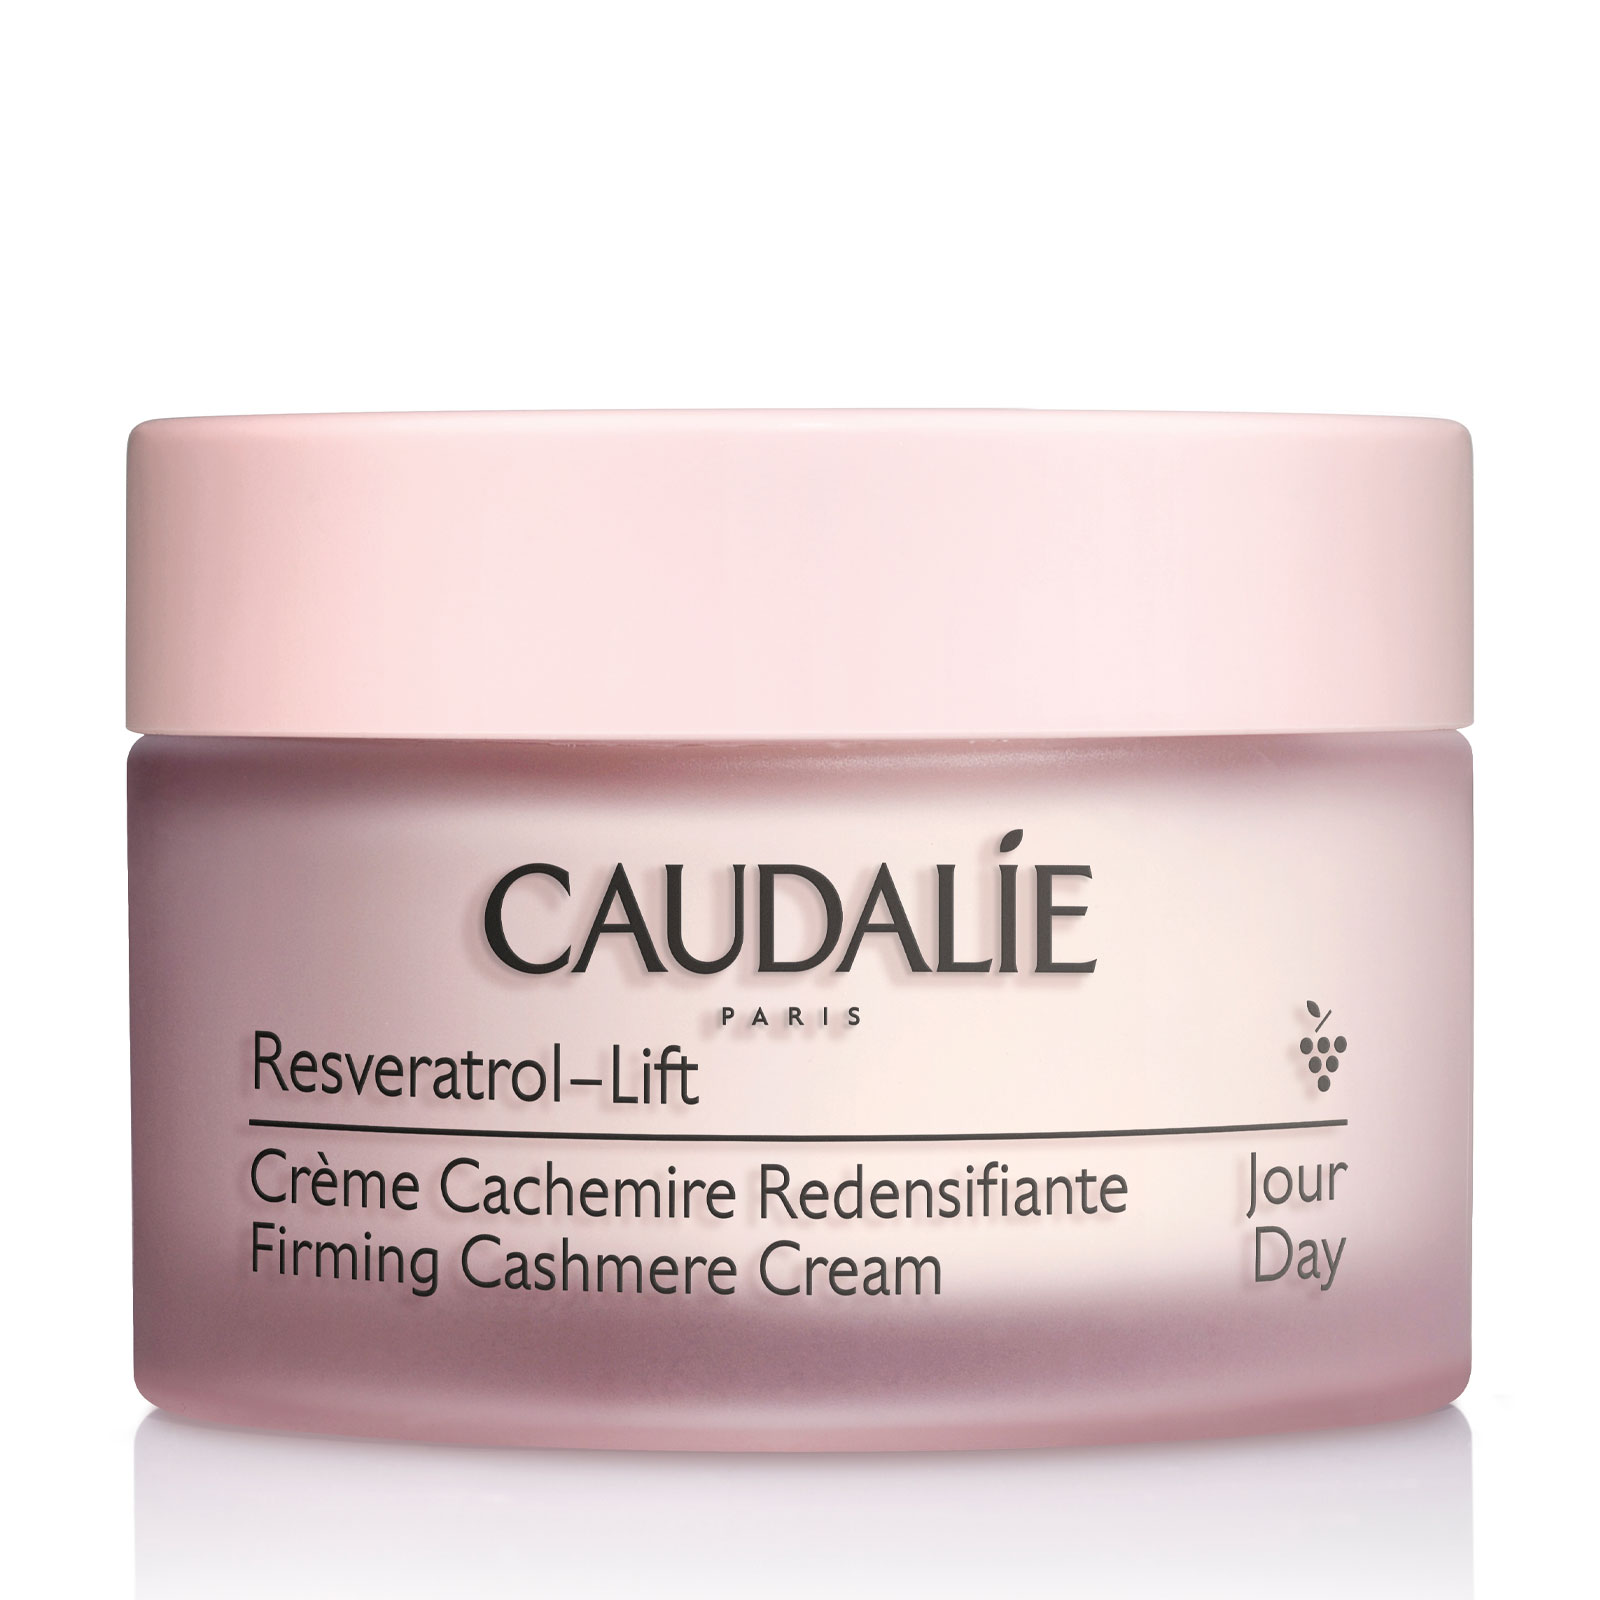 Caudalie Resv�ratrol [lift] Firming Cashmere Cream 50ml